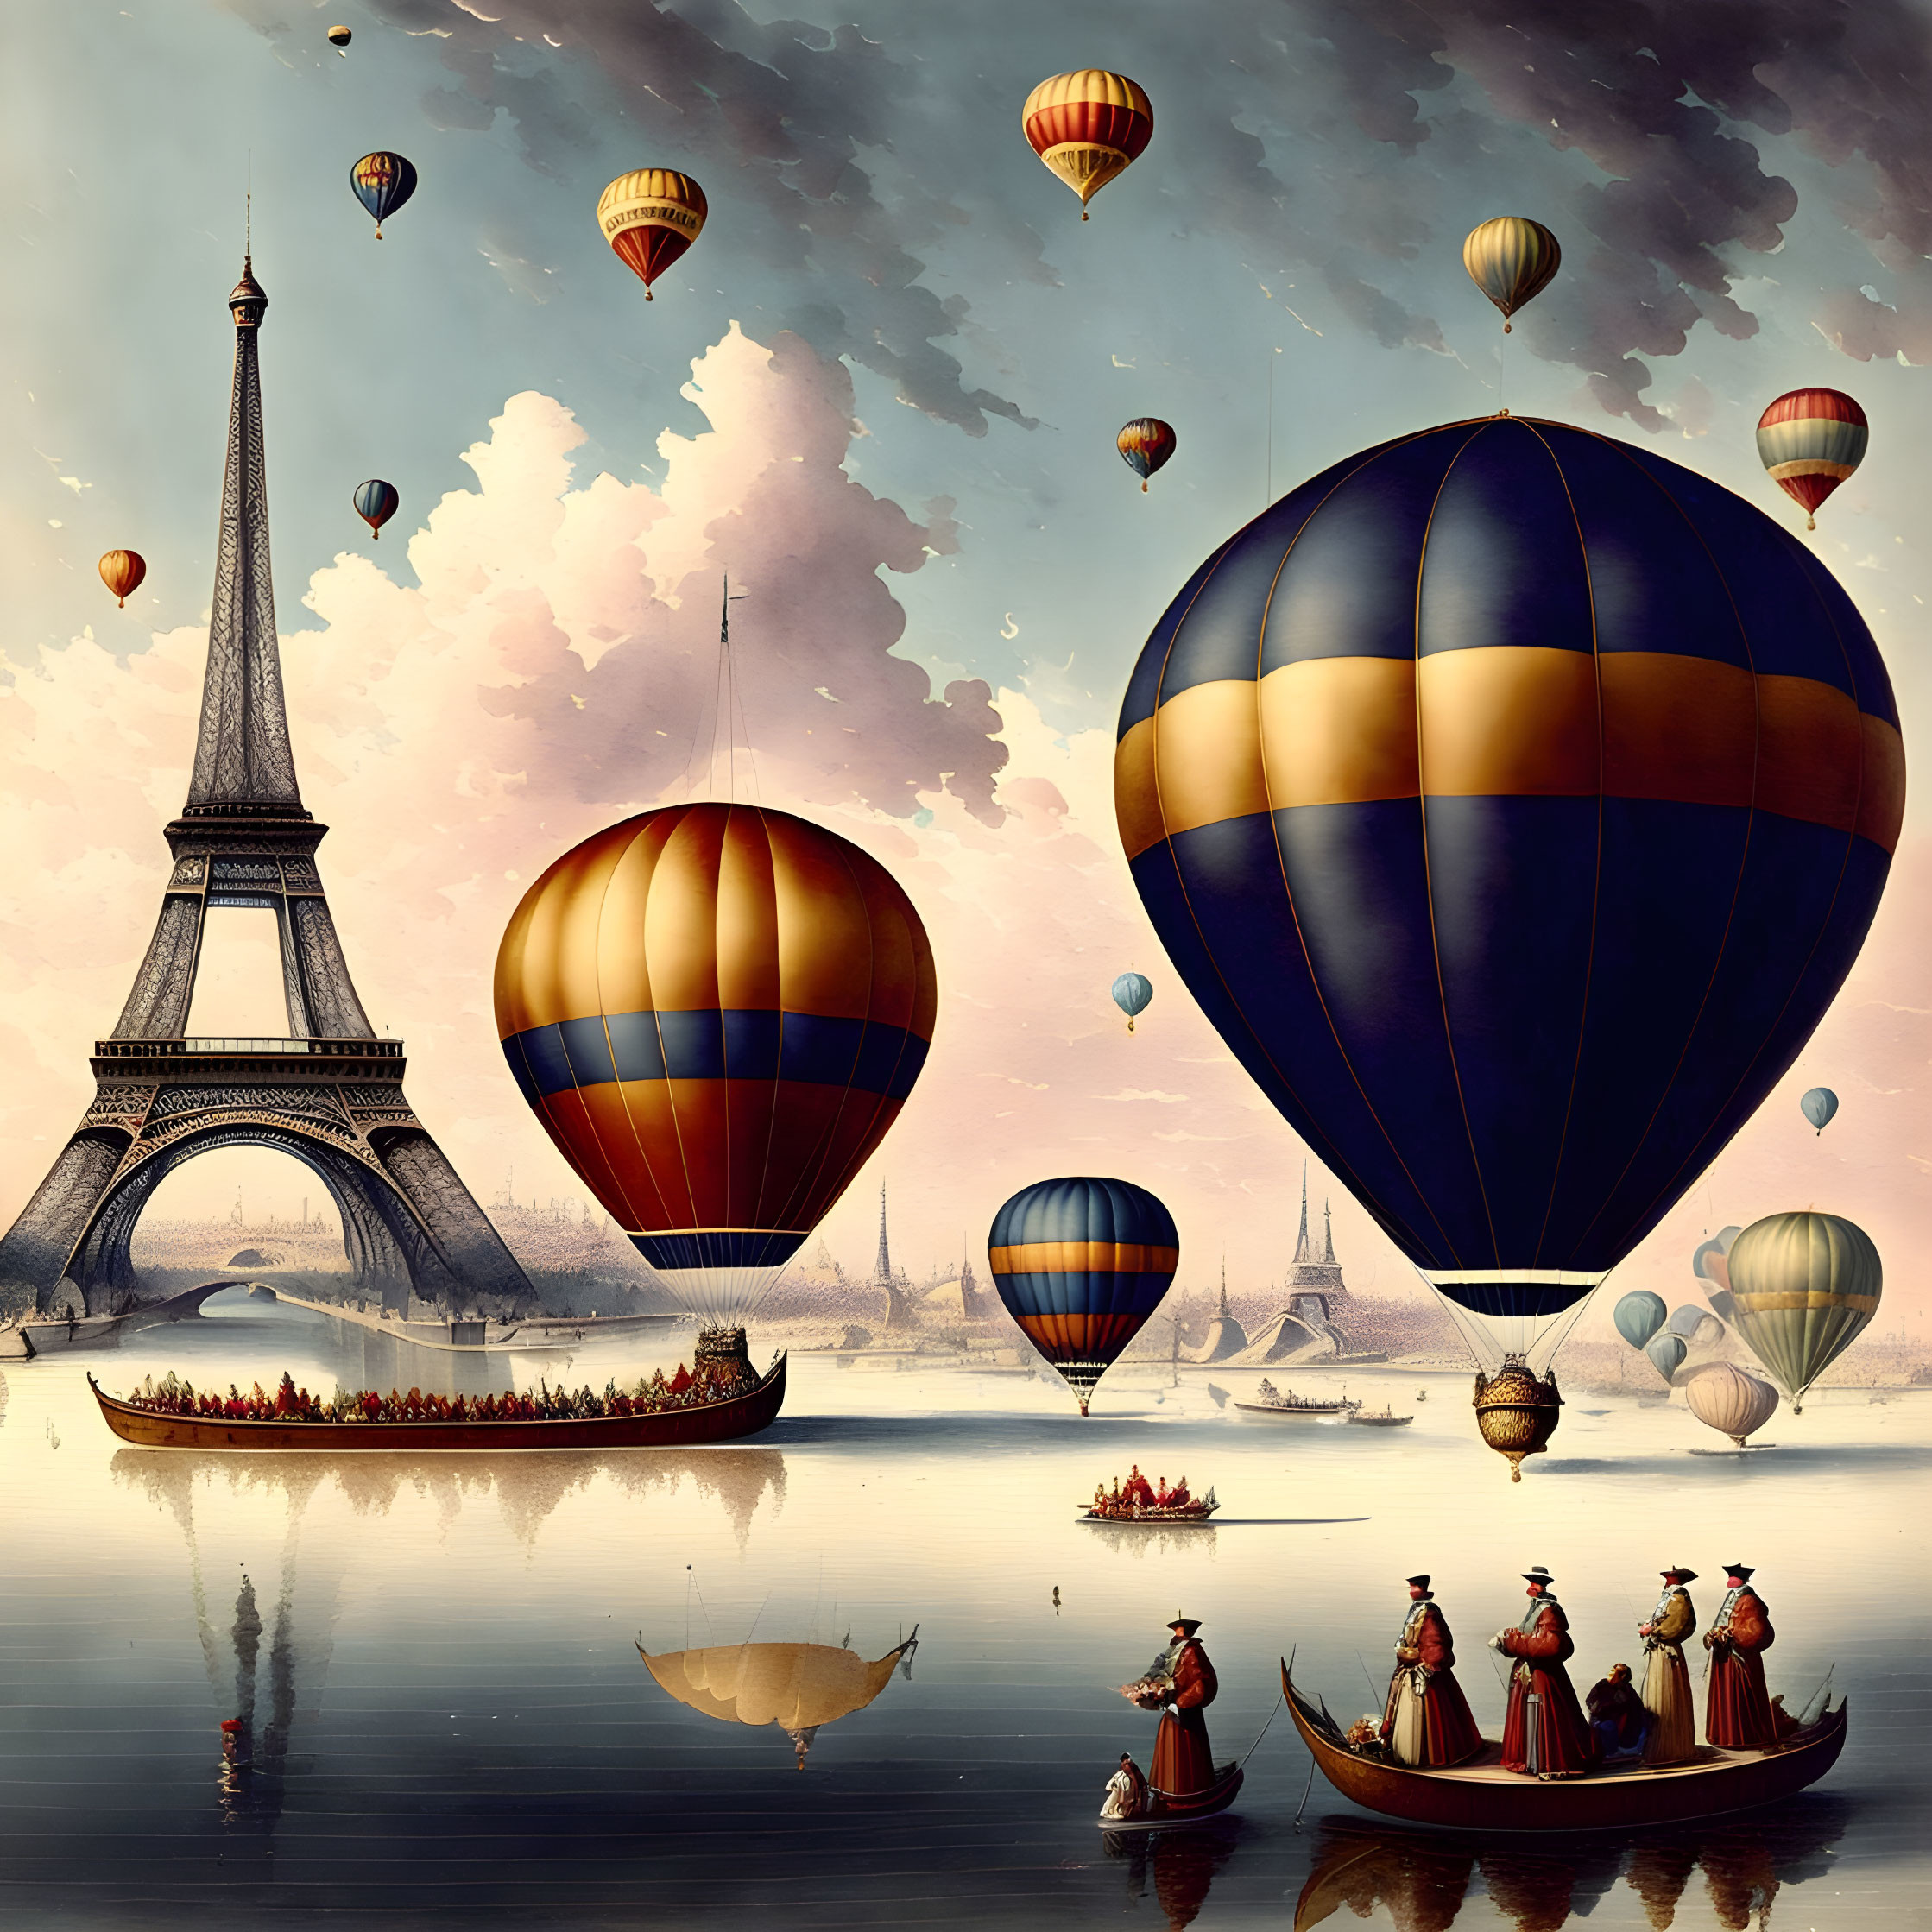 Surreal artwork: Eiffel Tower, hot air balloons, elegant figures on water